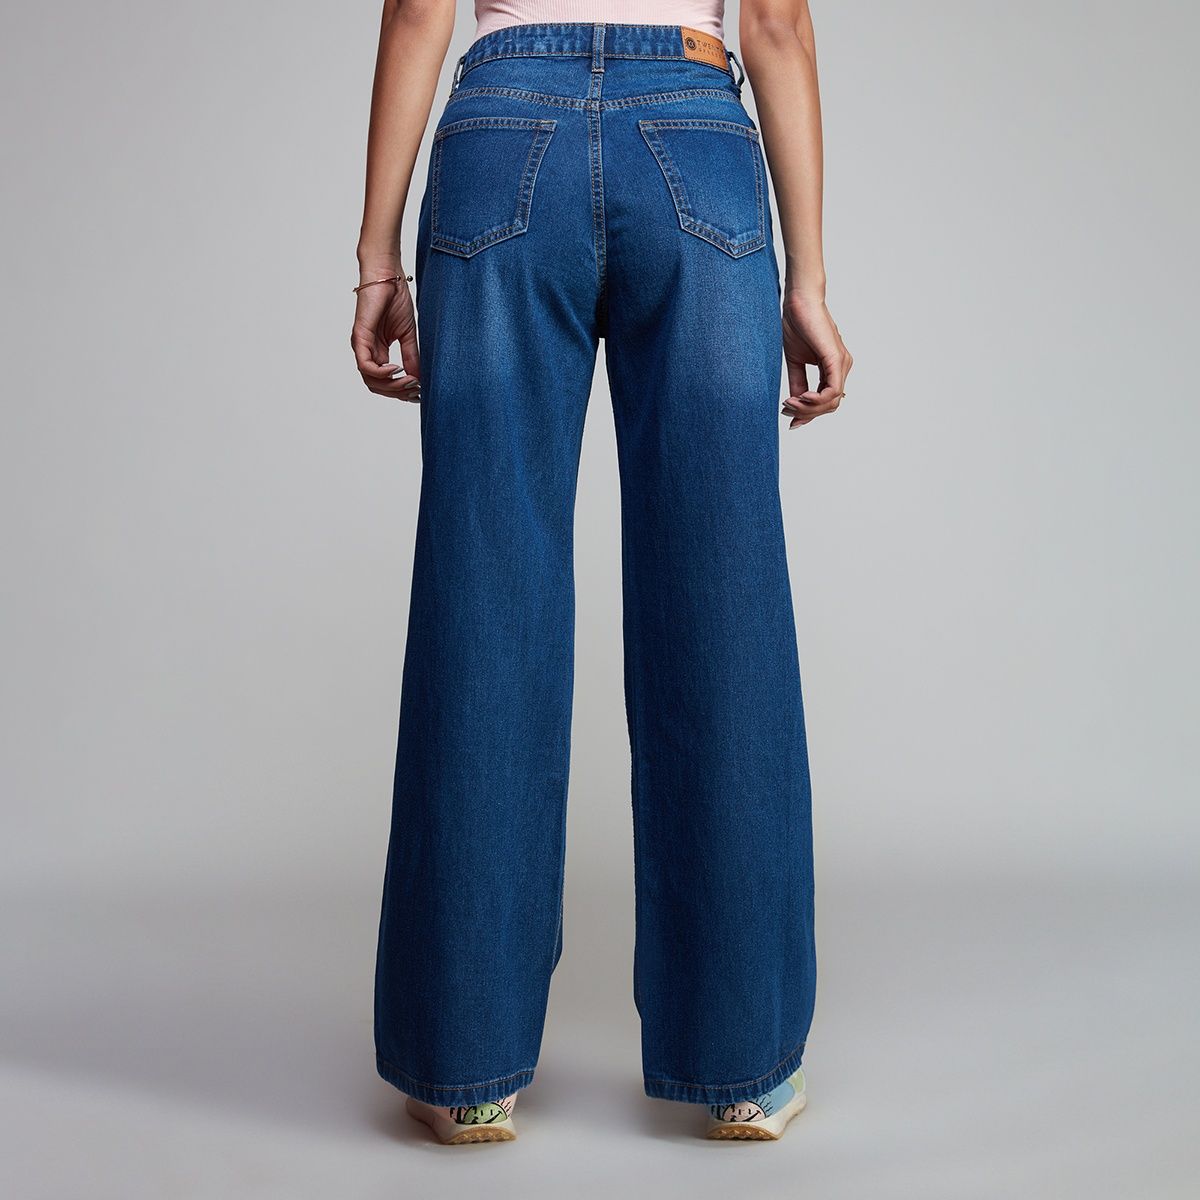 Mens Flare Jeans, Streetwear Patchwork Wide Leg Denim Pants, Hip Hop Style  Heavy Wash Blue Slim Fit Jeans For Men From Dongguan_ss, $44.17 | DHgate.Com